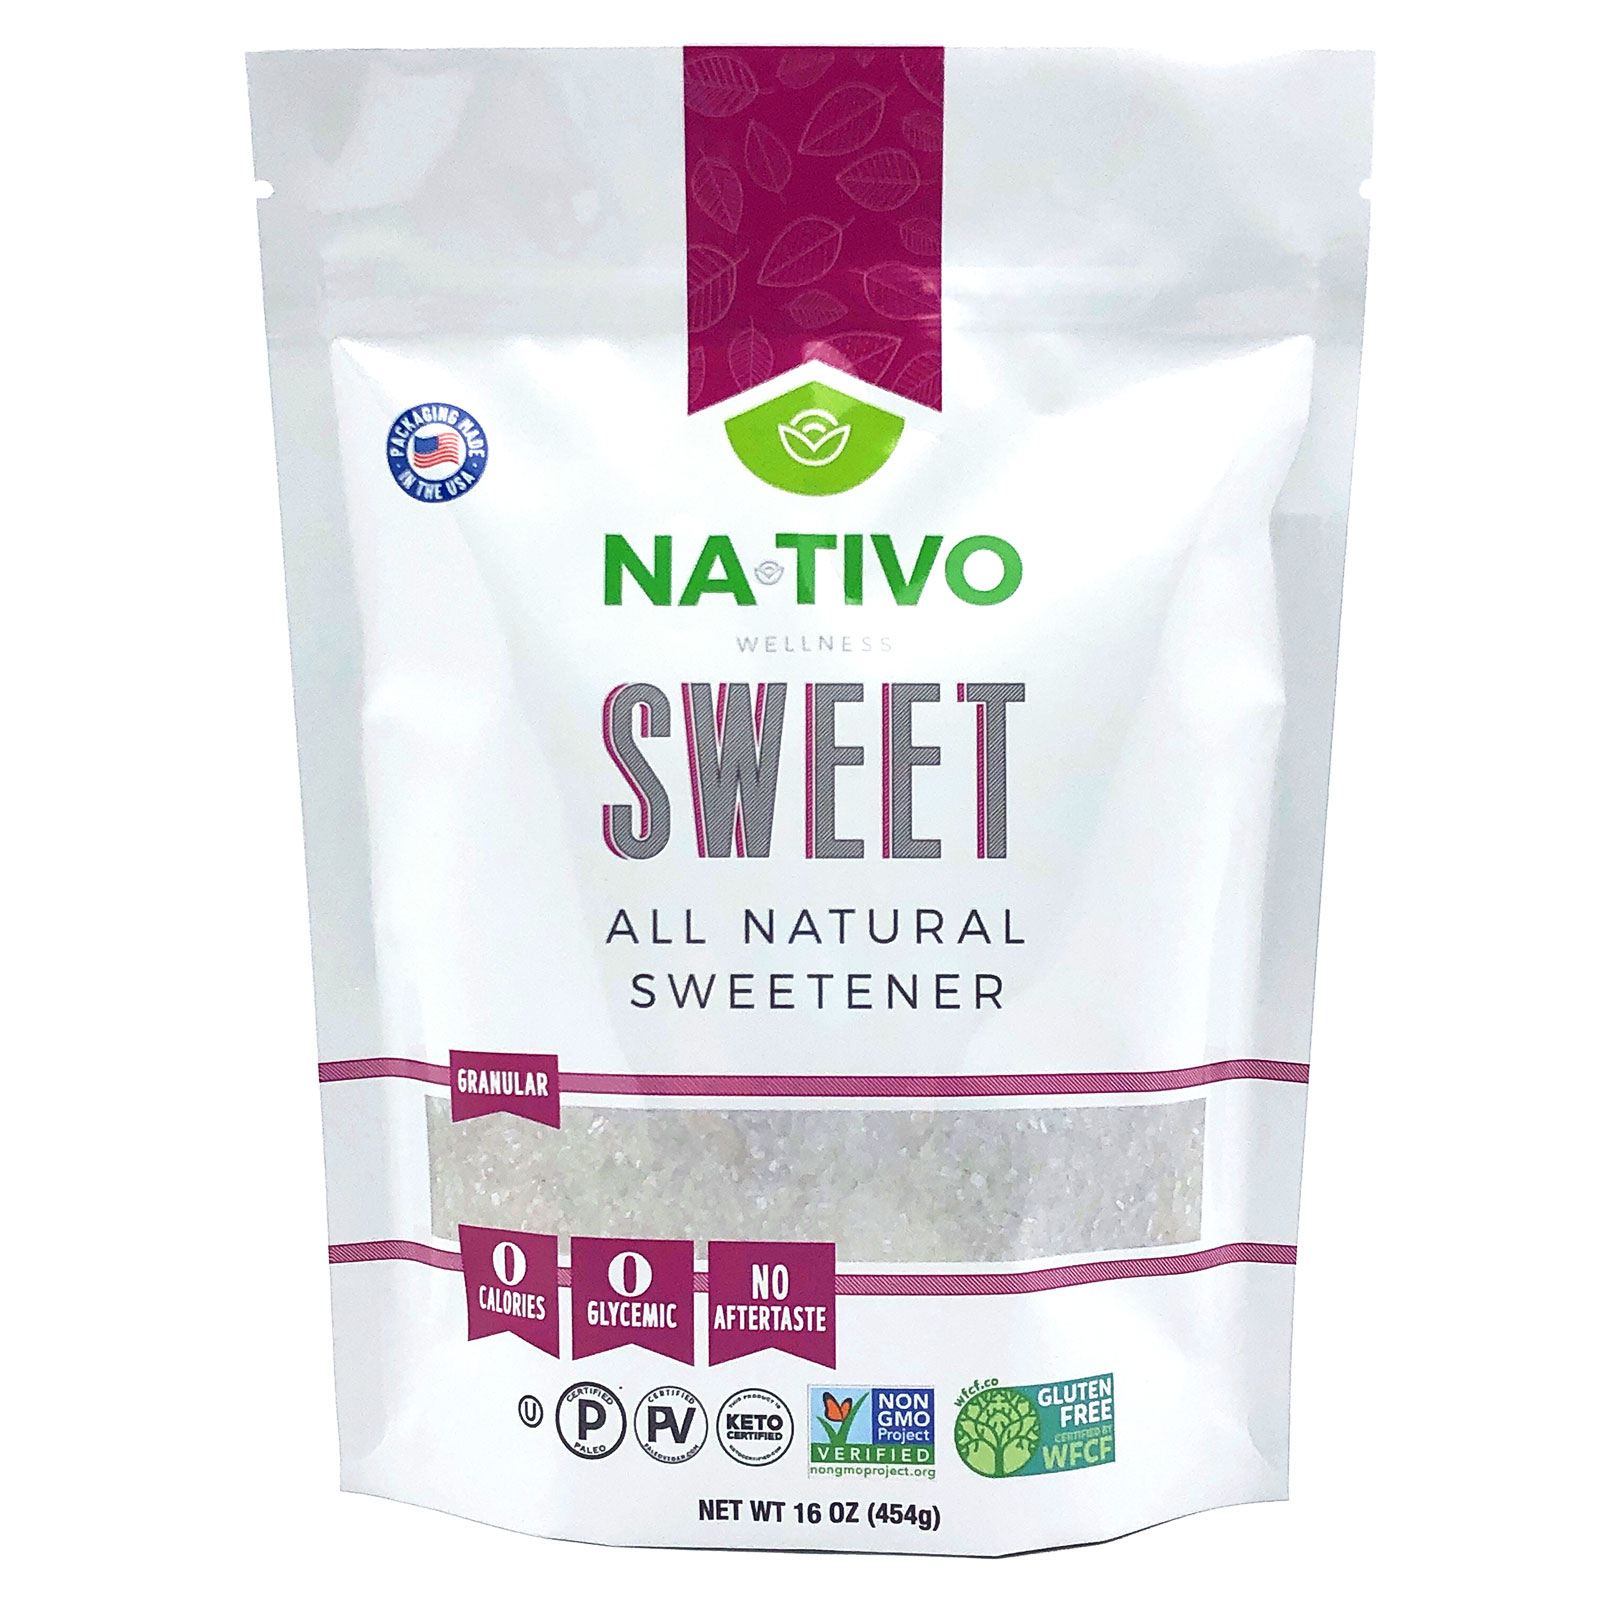 NaTivo Sweet All Natural Sweetener 12 units per case 1.0 lb